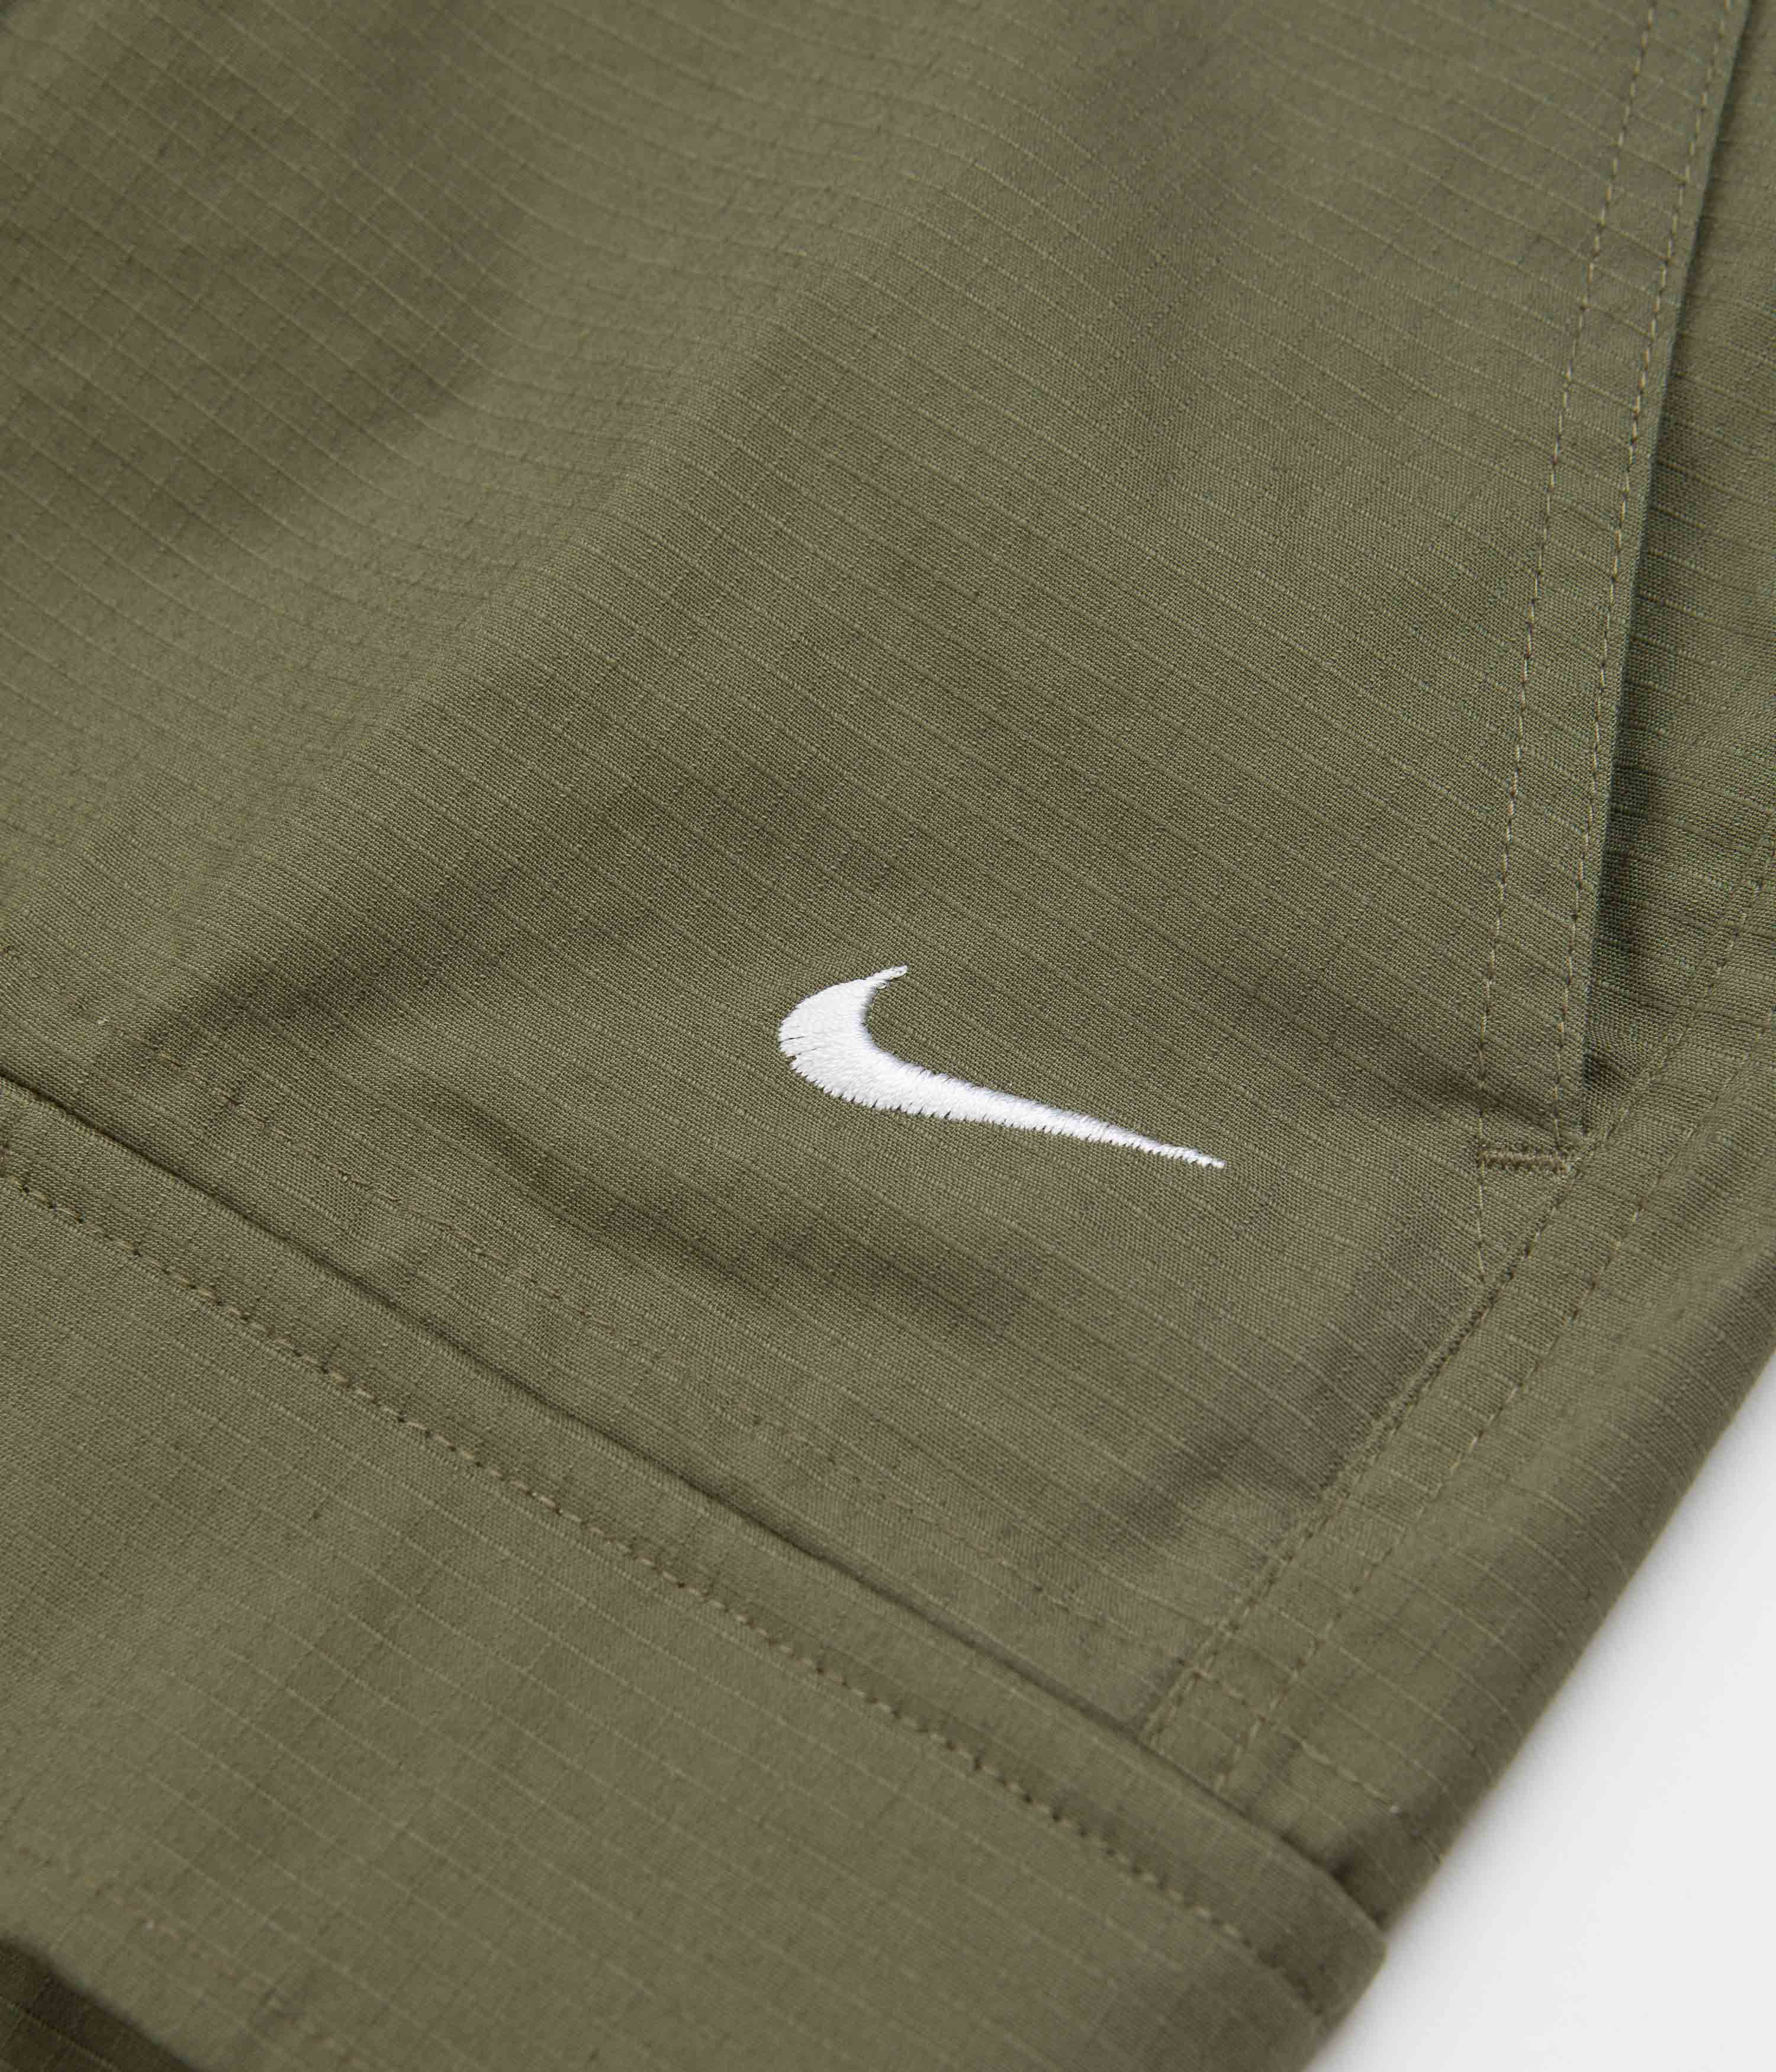 Nike SB Kearny Cargo Pants - Medium Olive / White | Flatspot